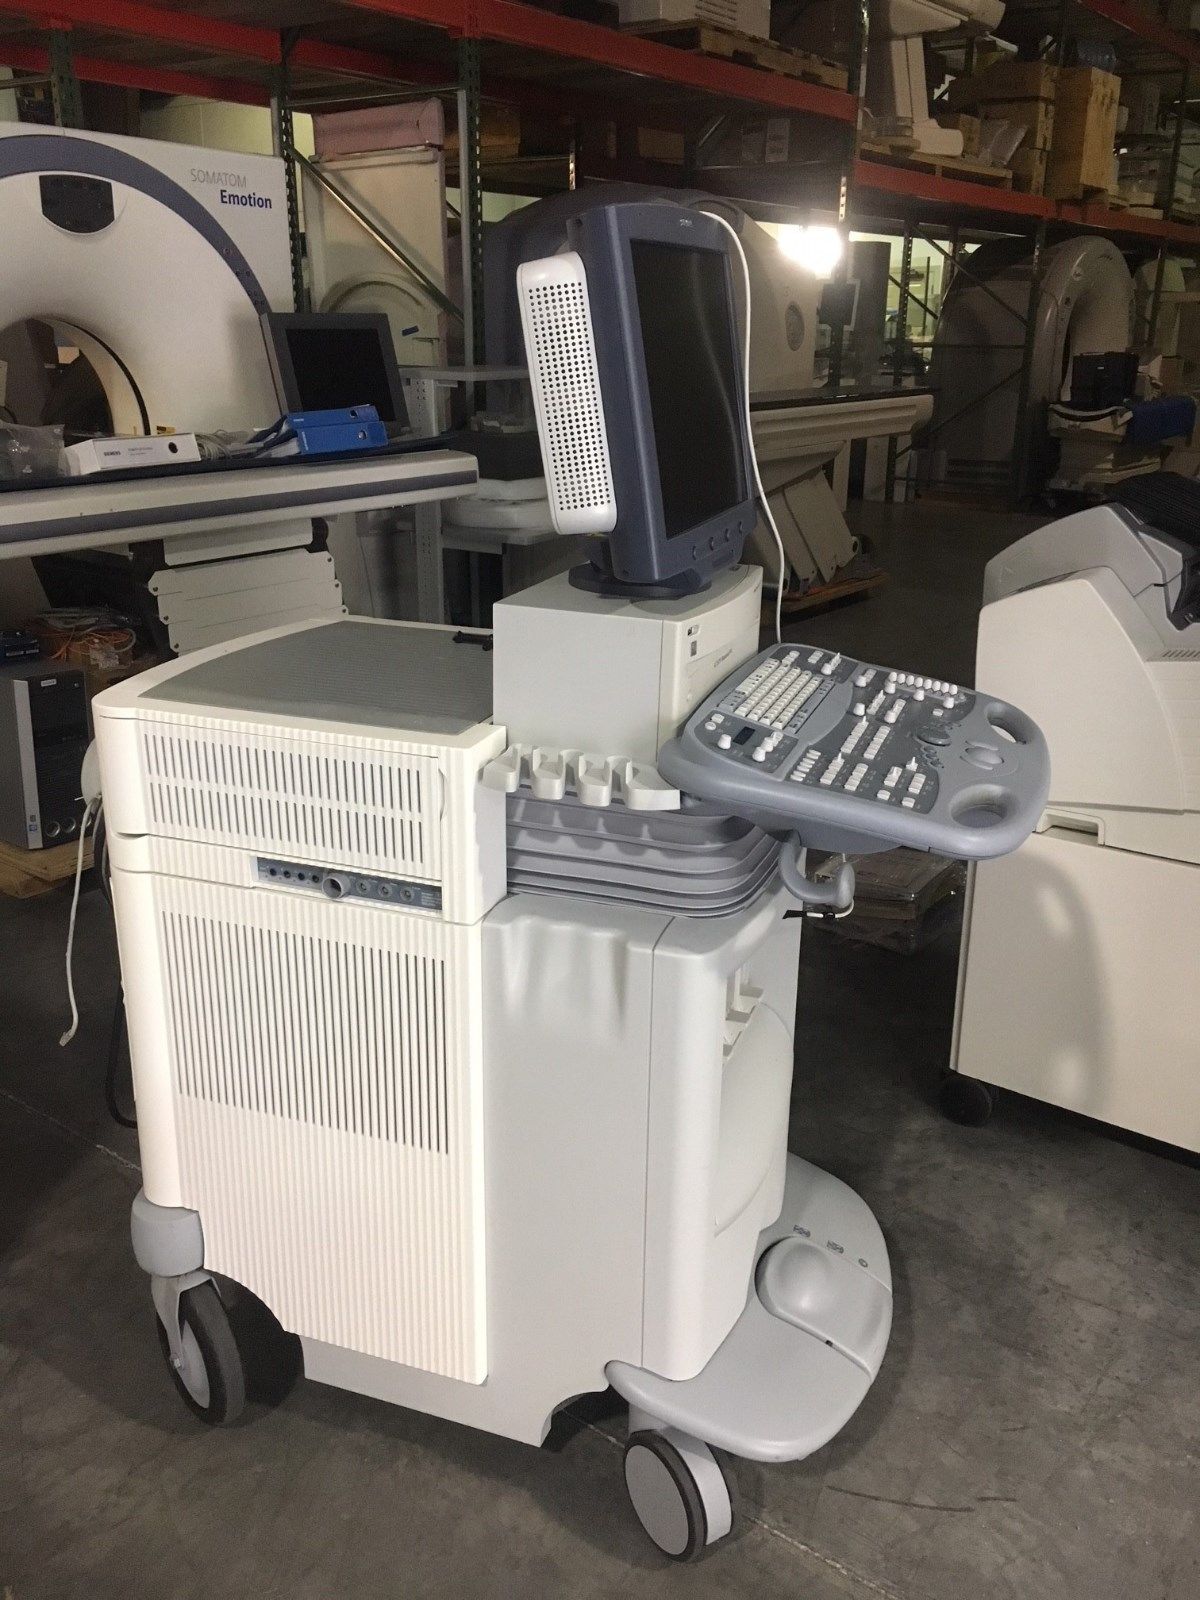 ACUSON Ultrasound SEQUOIA 512 DIAGNOSTIC ULTRASOUND MACHINES FOR SALE